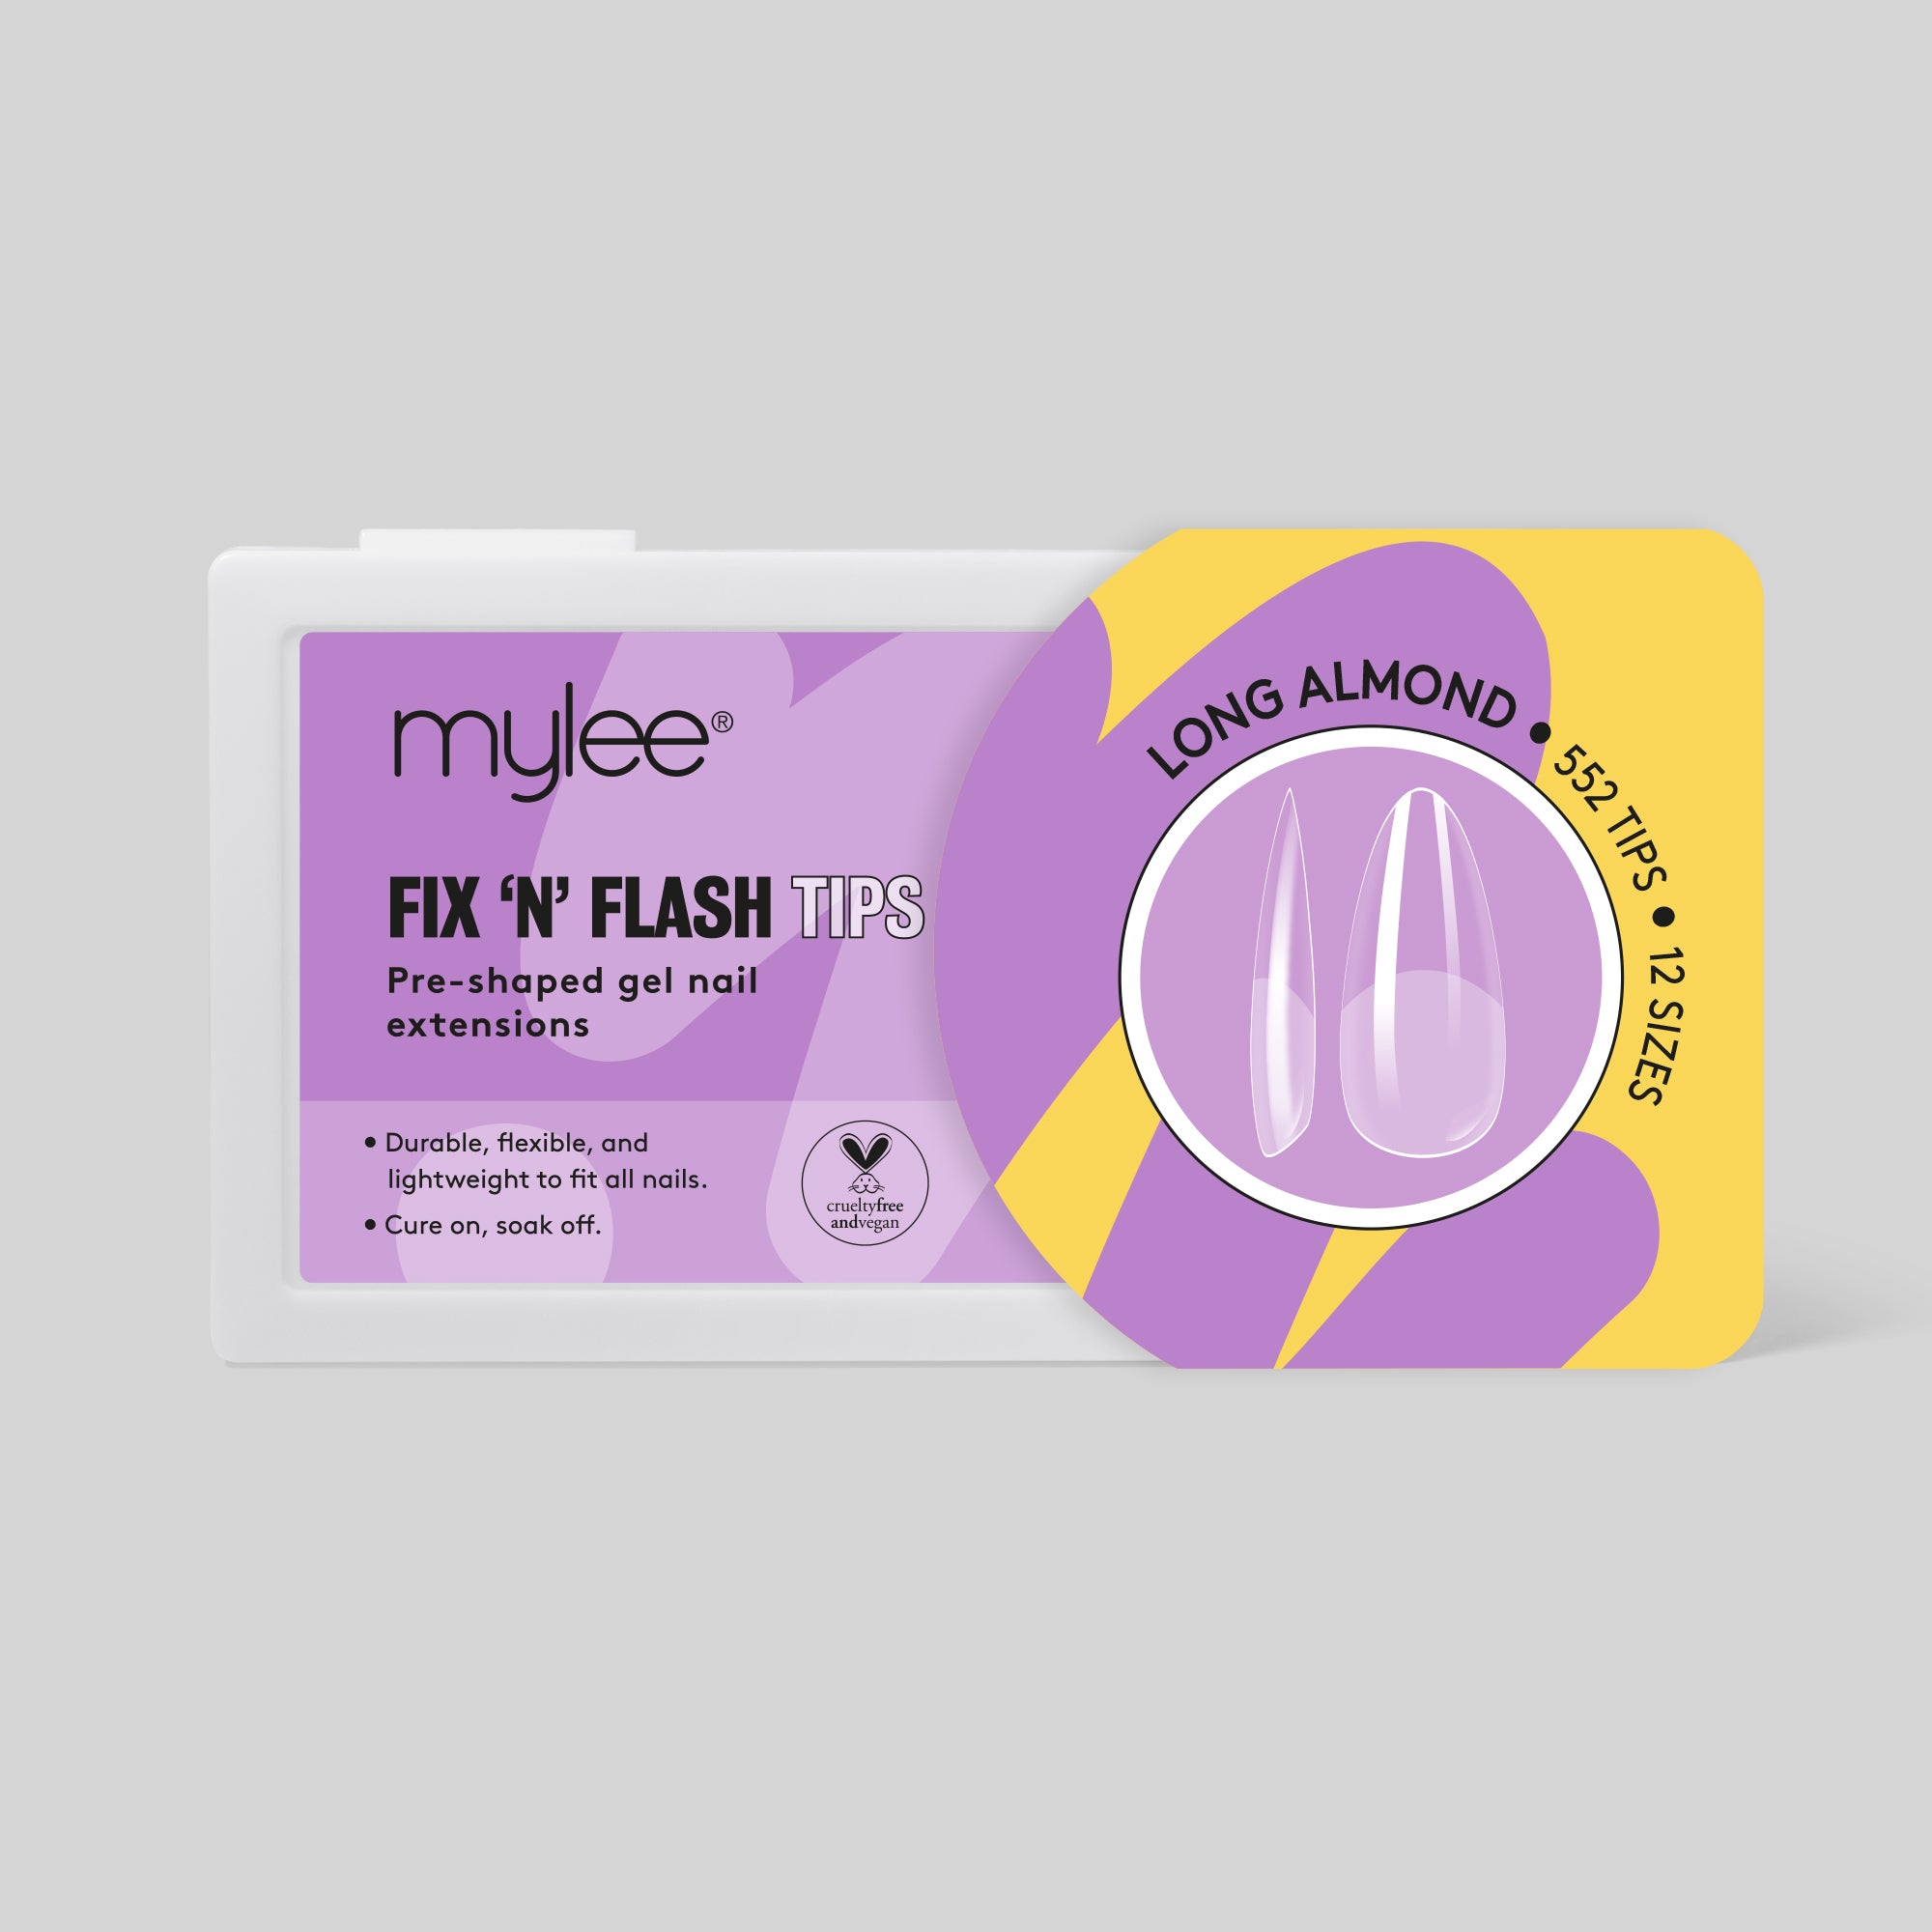 Mylee Fix 'N' Flash Tips - Long Almond